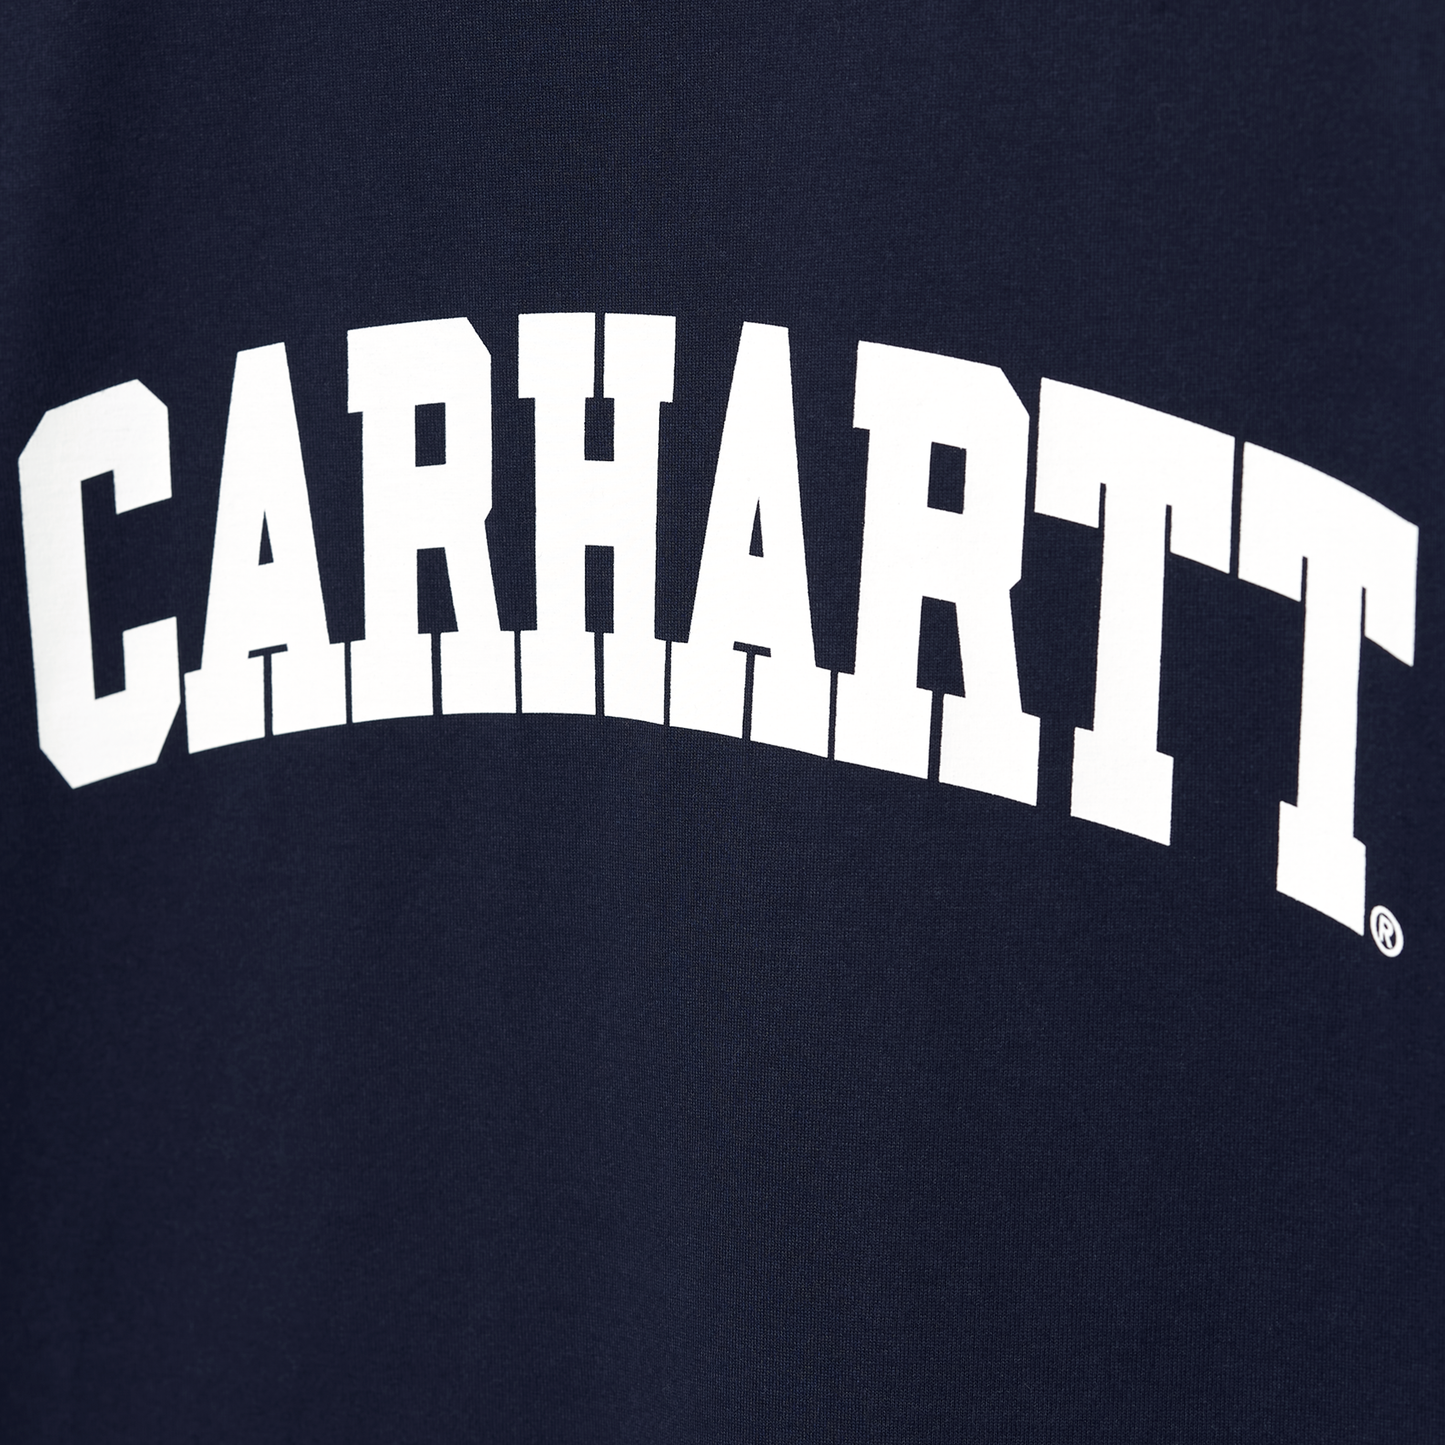 Carhartt WIP University T-Shirt Dark Navy/White. Foto de  detalhe do logotipo.